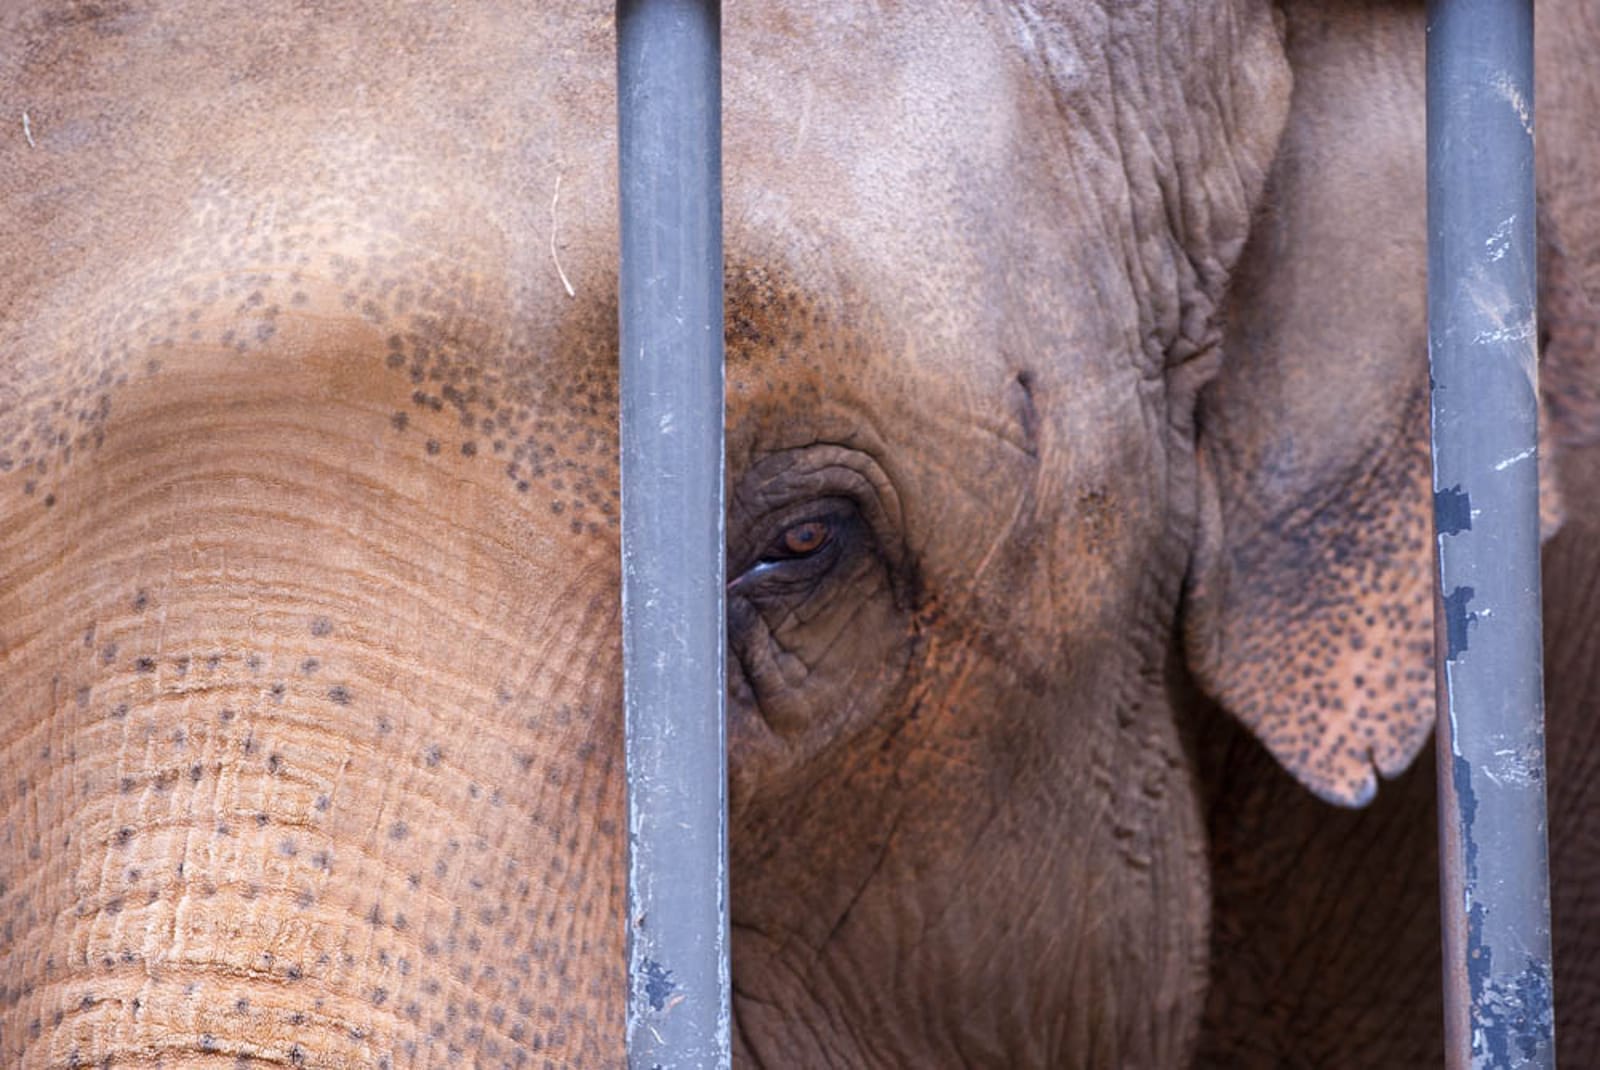 Why Elephants Don't Belong in Zoos!